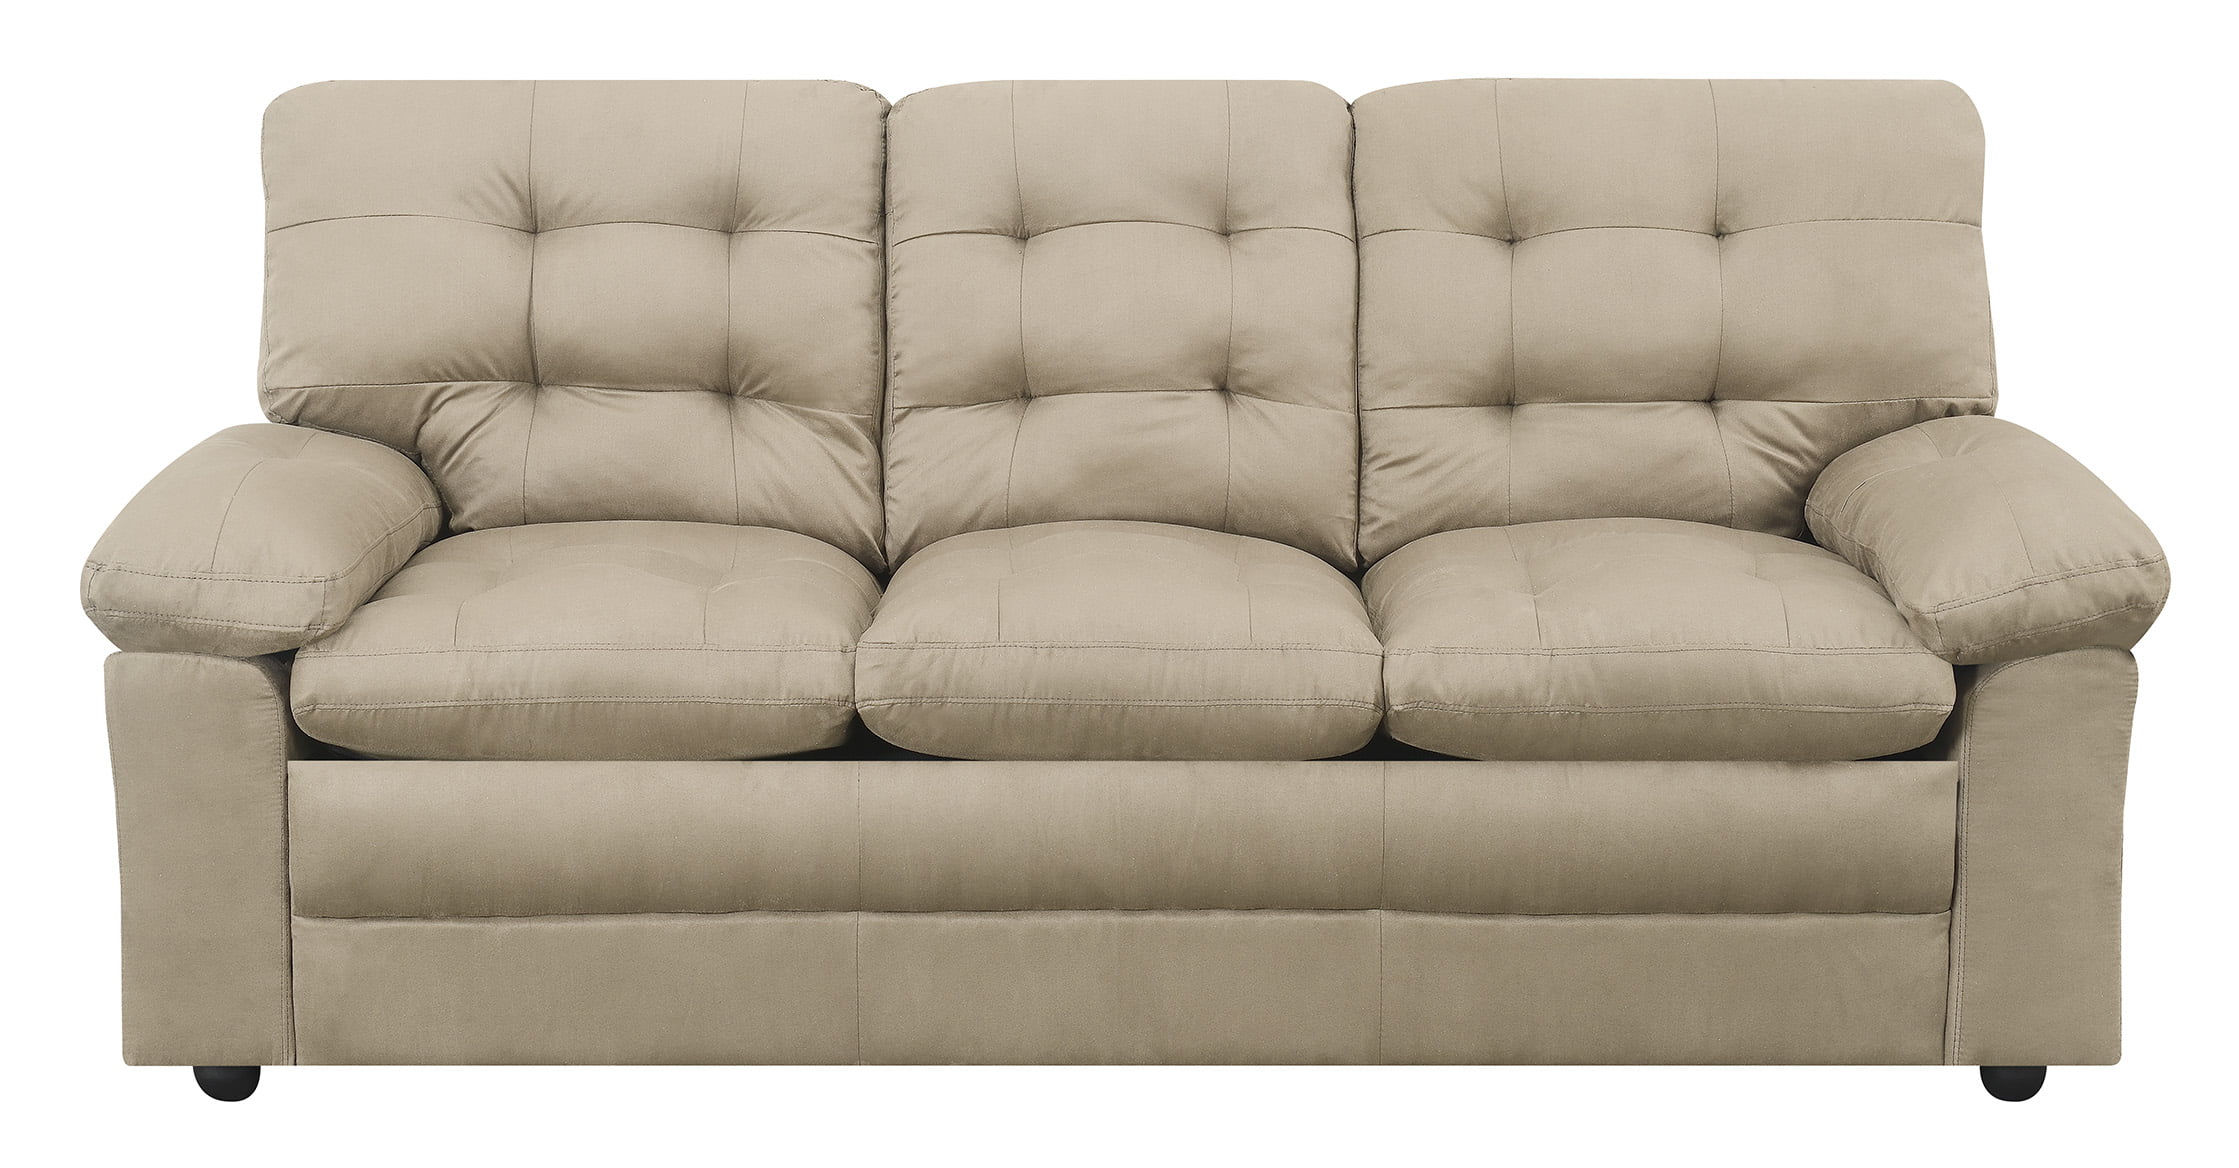 mainstays faux leather buchannan apartment sofa